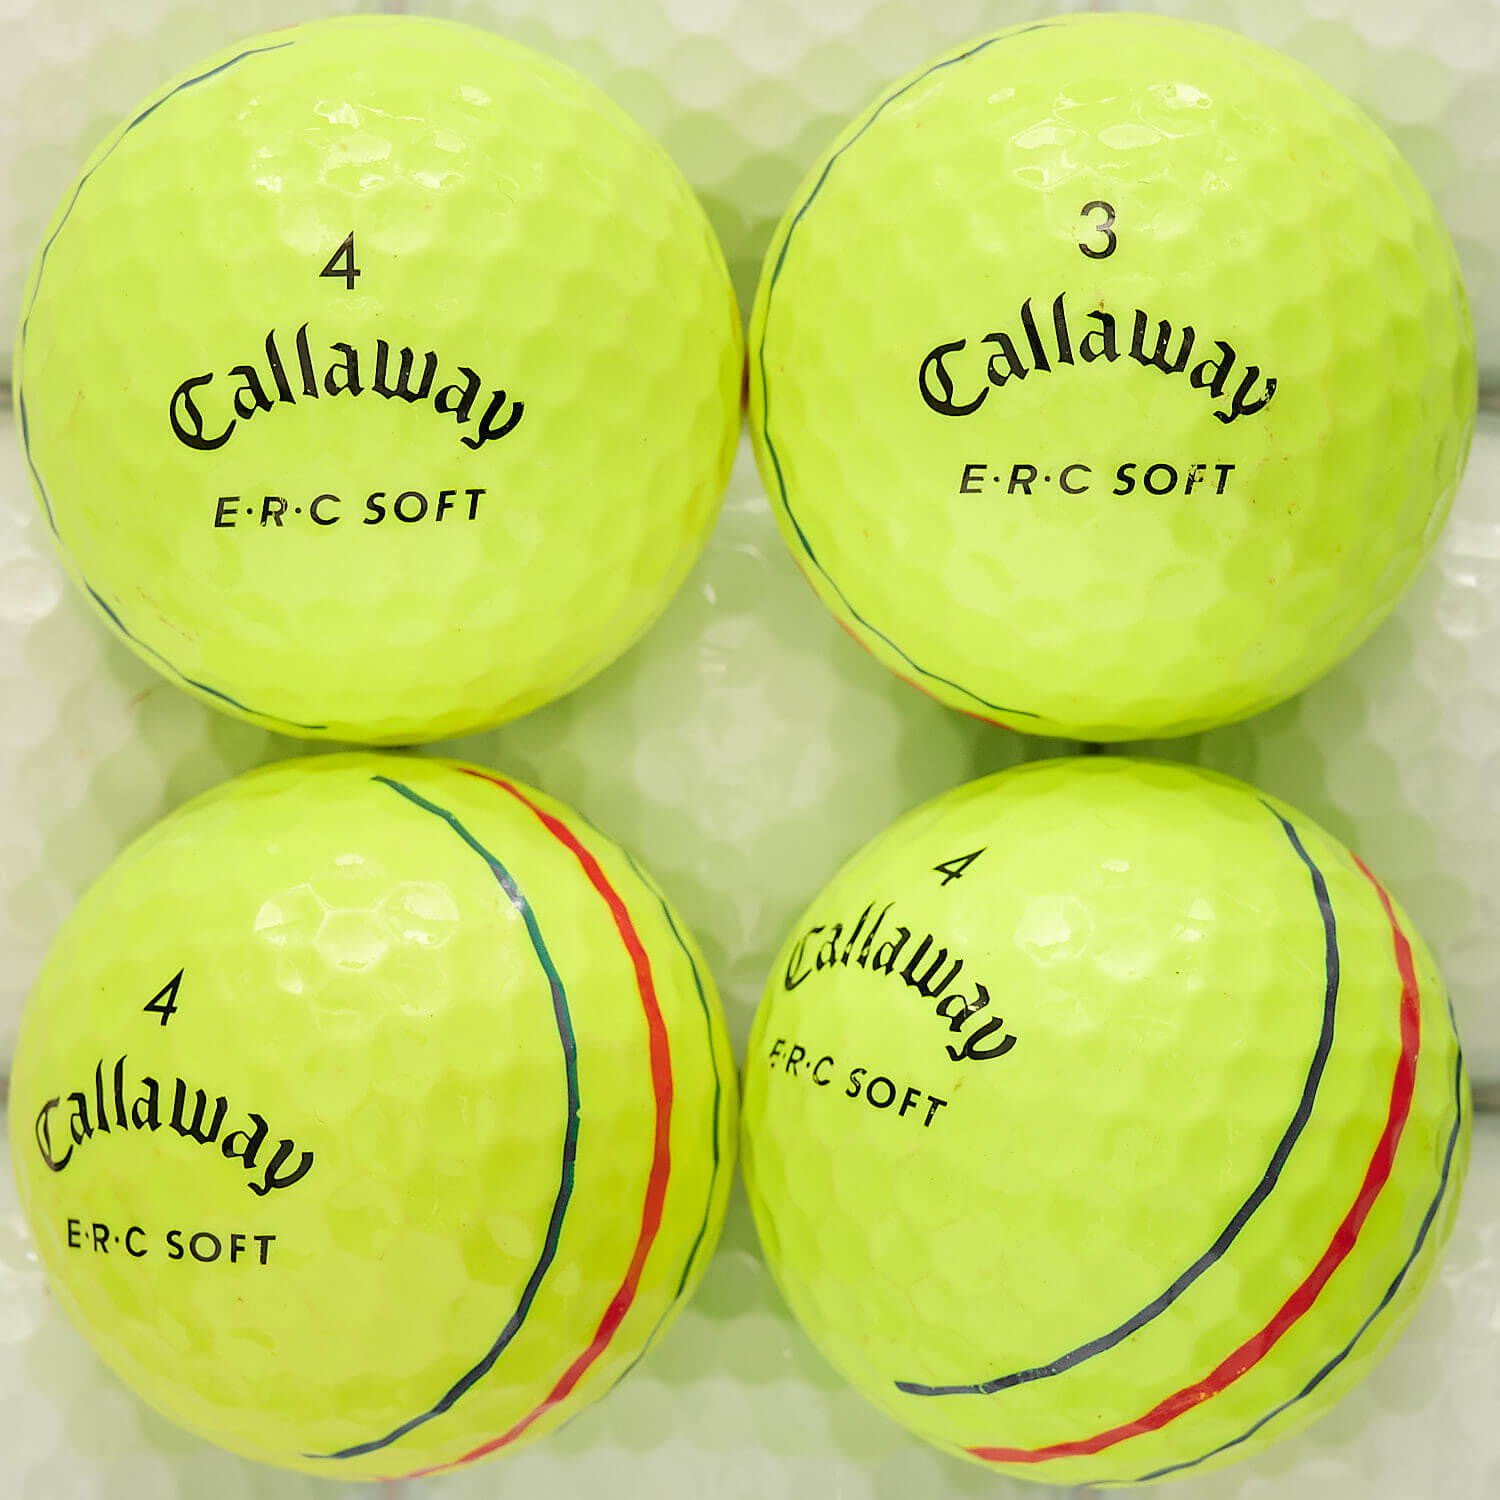 25 Callaway E.R.C Soft Lakeballs, yellow